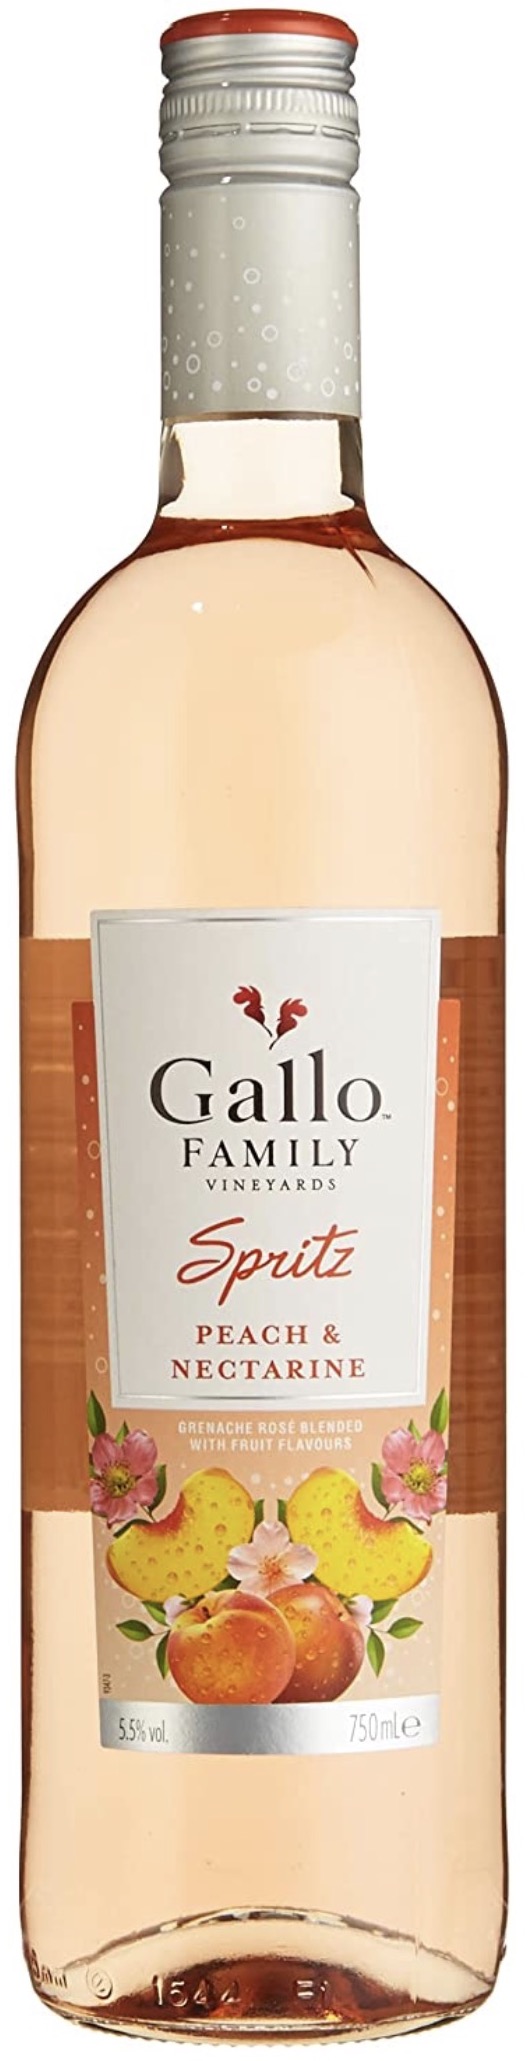 Gallo Family Spritz Pfirsich Nektarine 5,5% vol. 0,75L